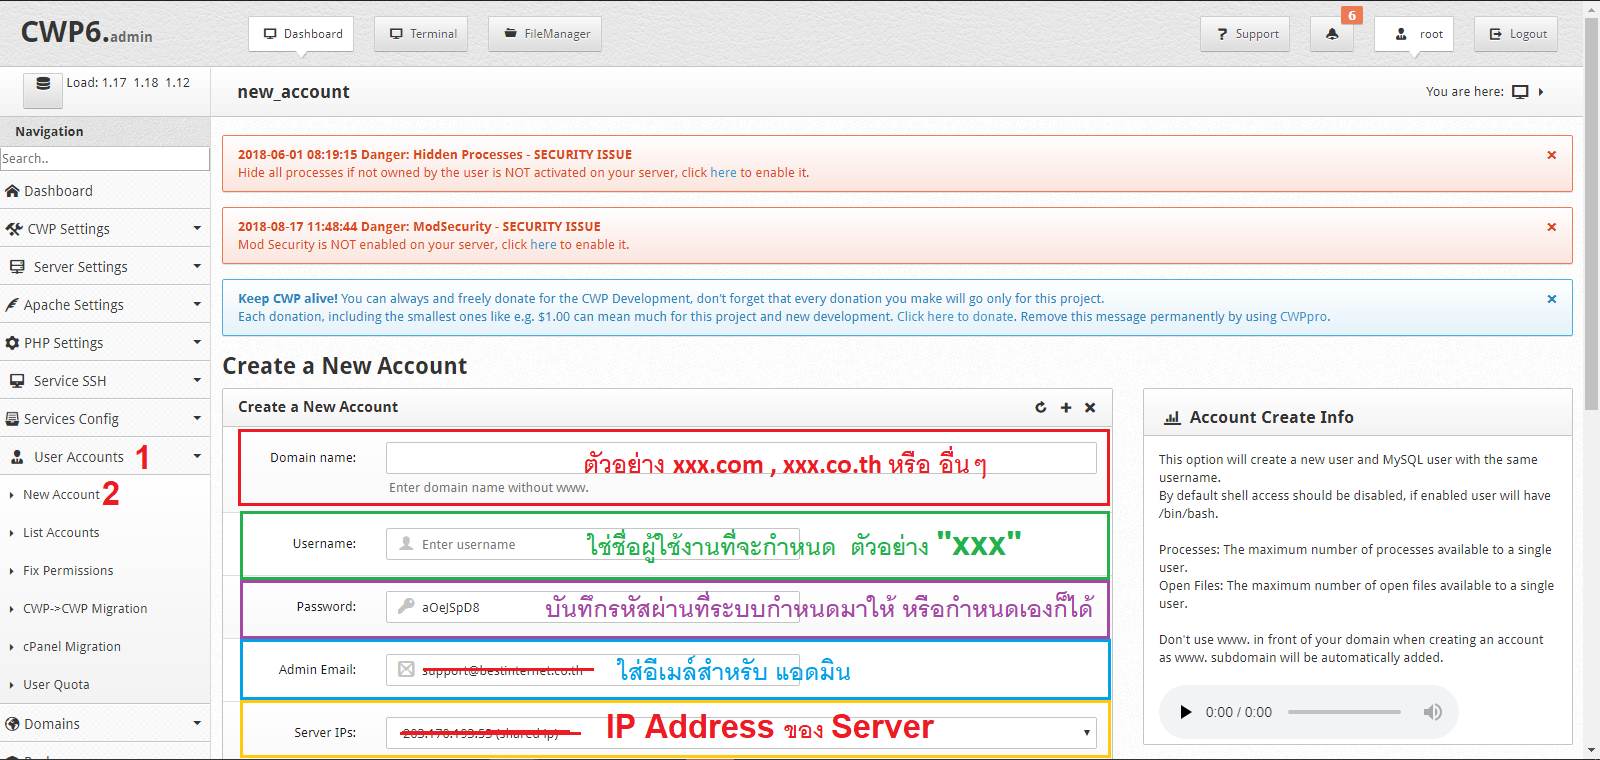 ftp account centos web panel (cwp)2